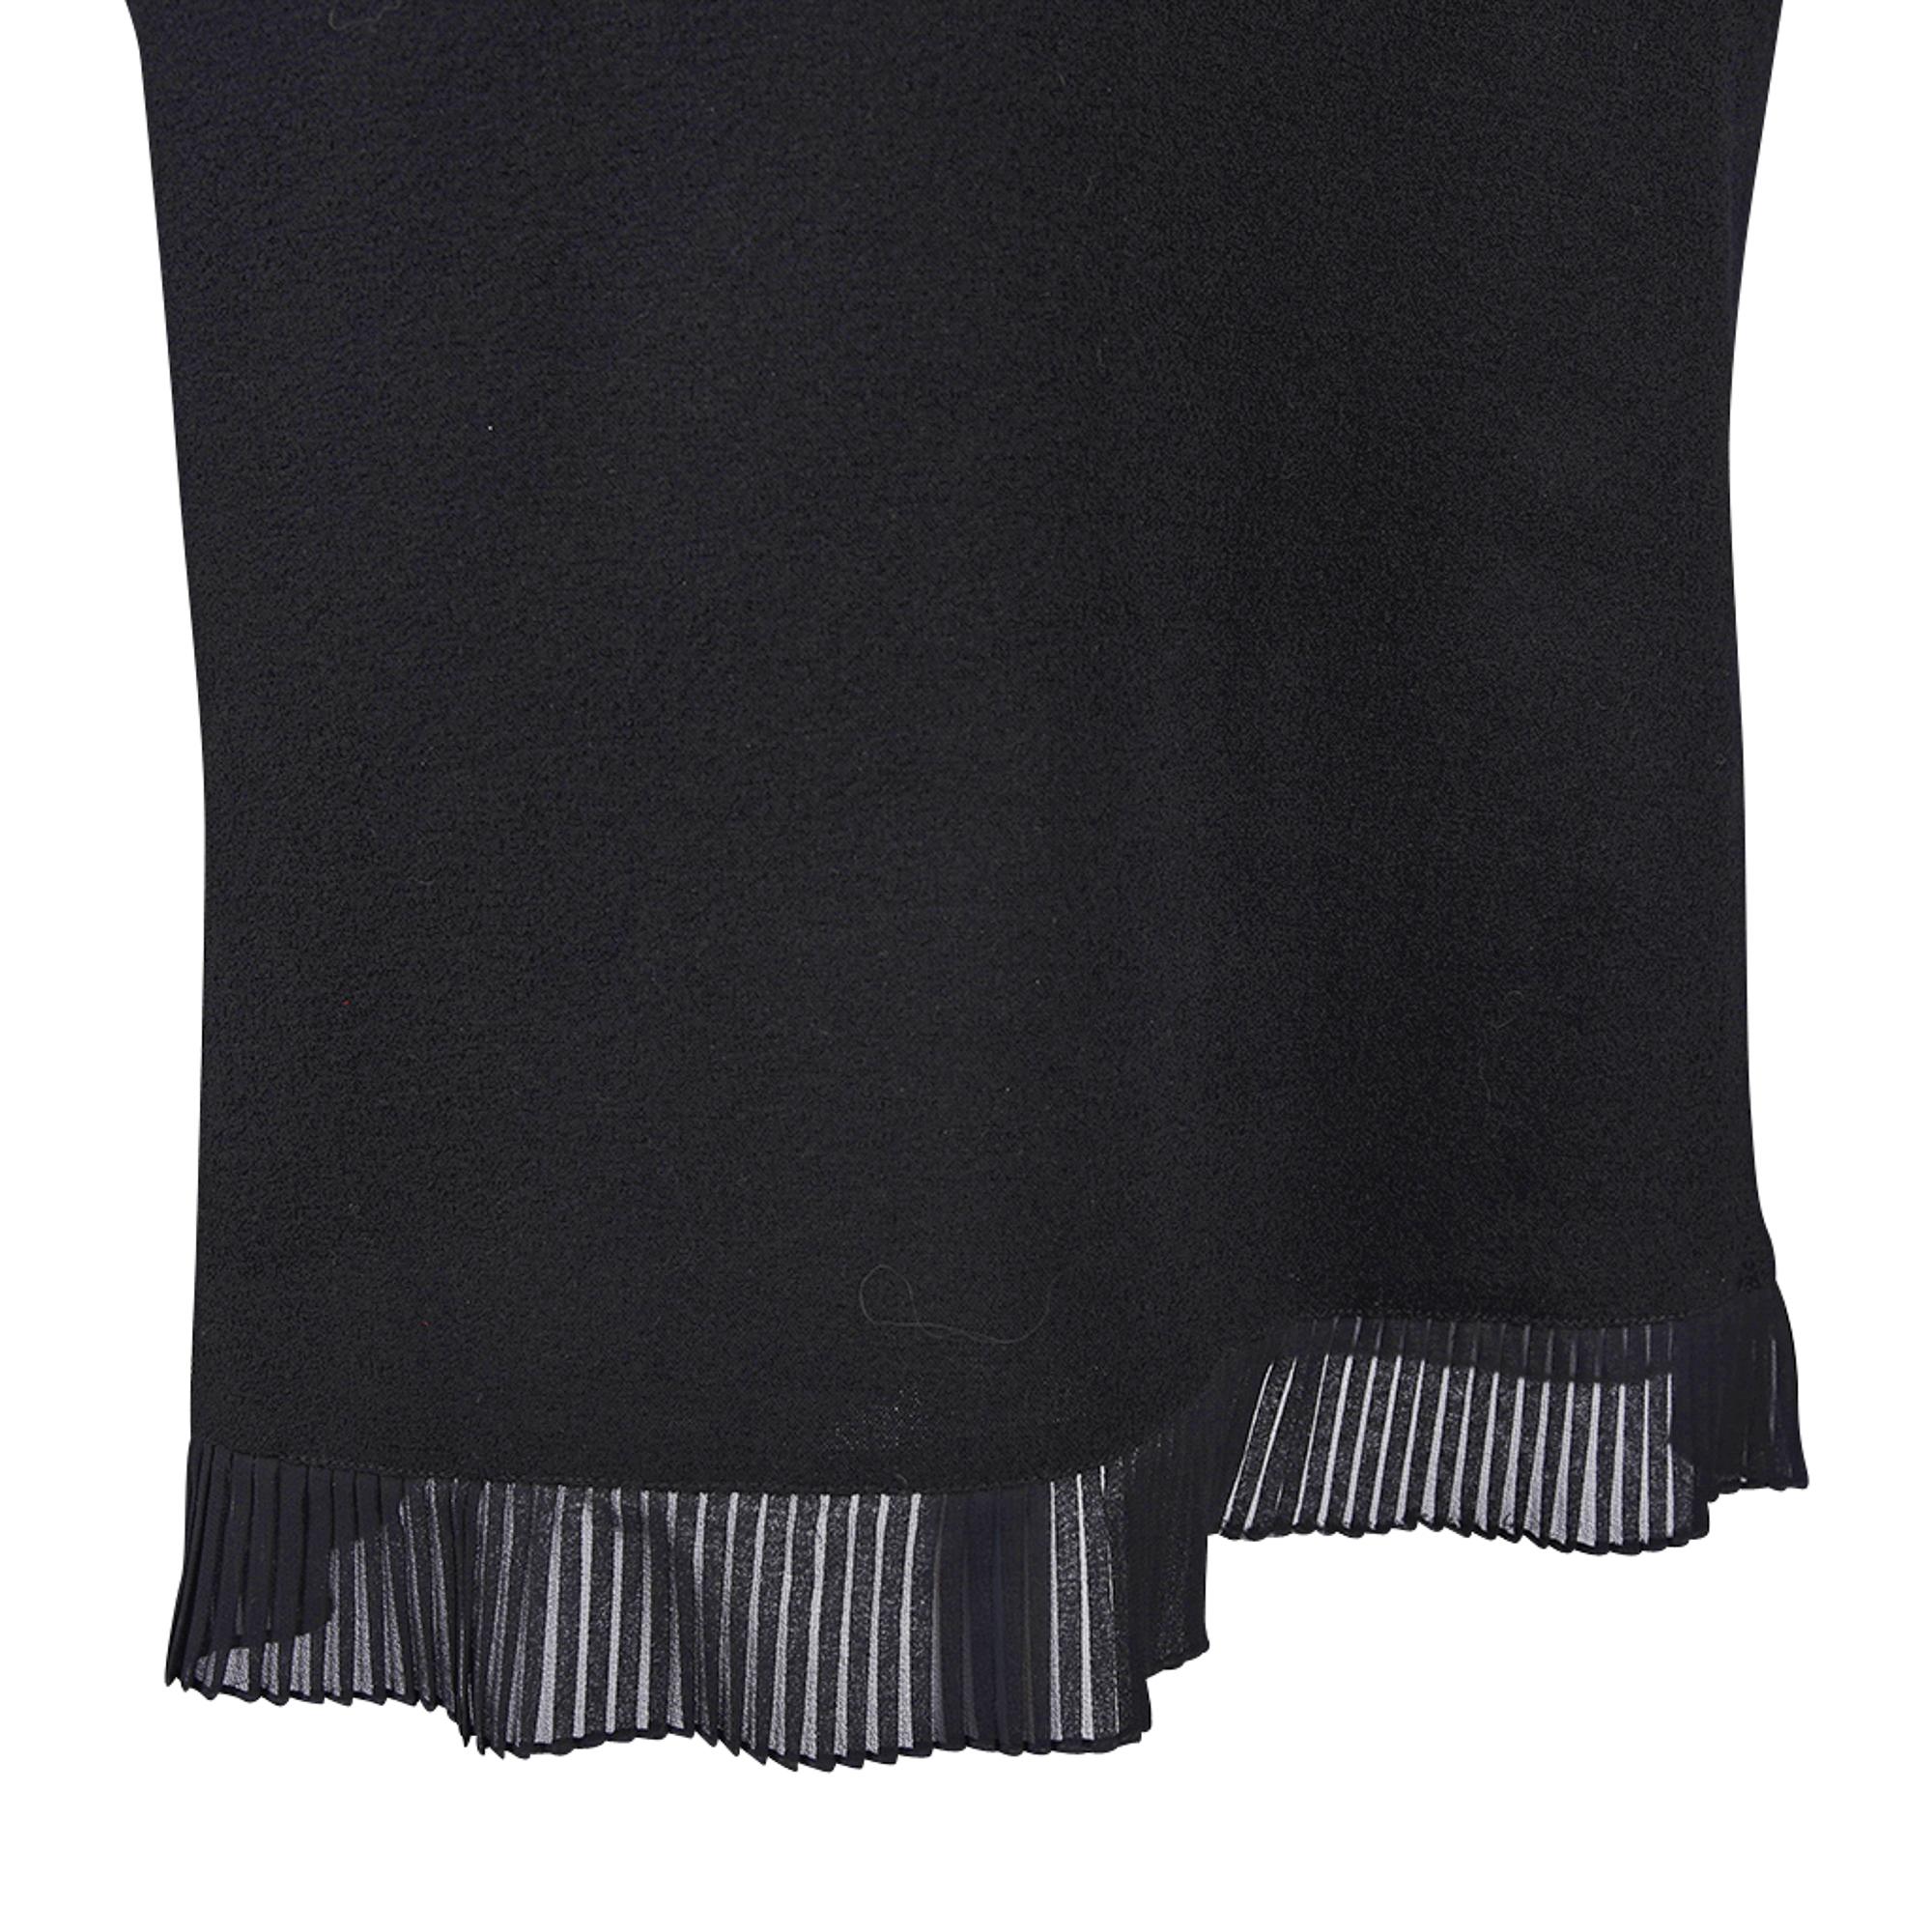 Guaranteed authentic Roberto Cavalli black pencil skirt.  
Skirt has 1.75